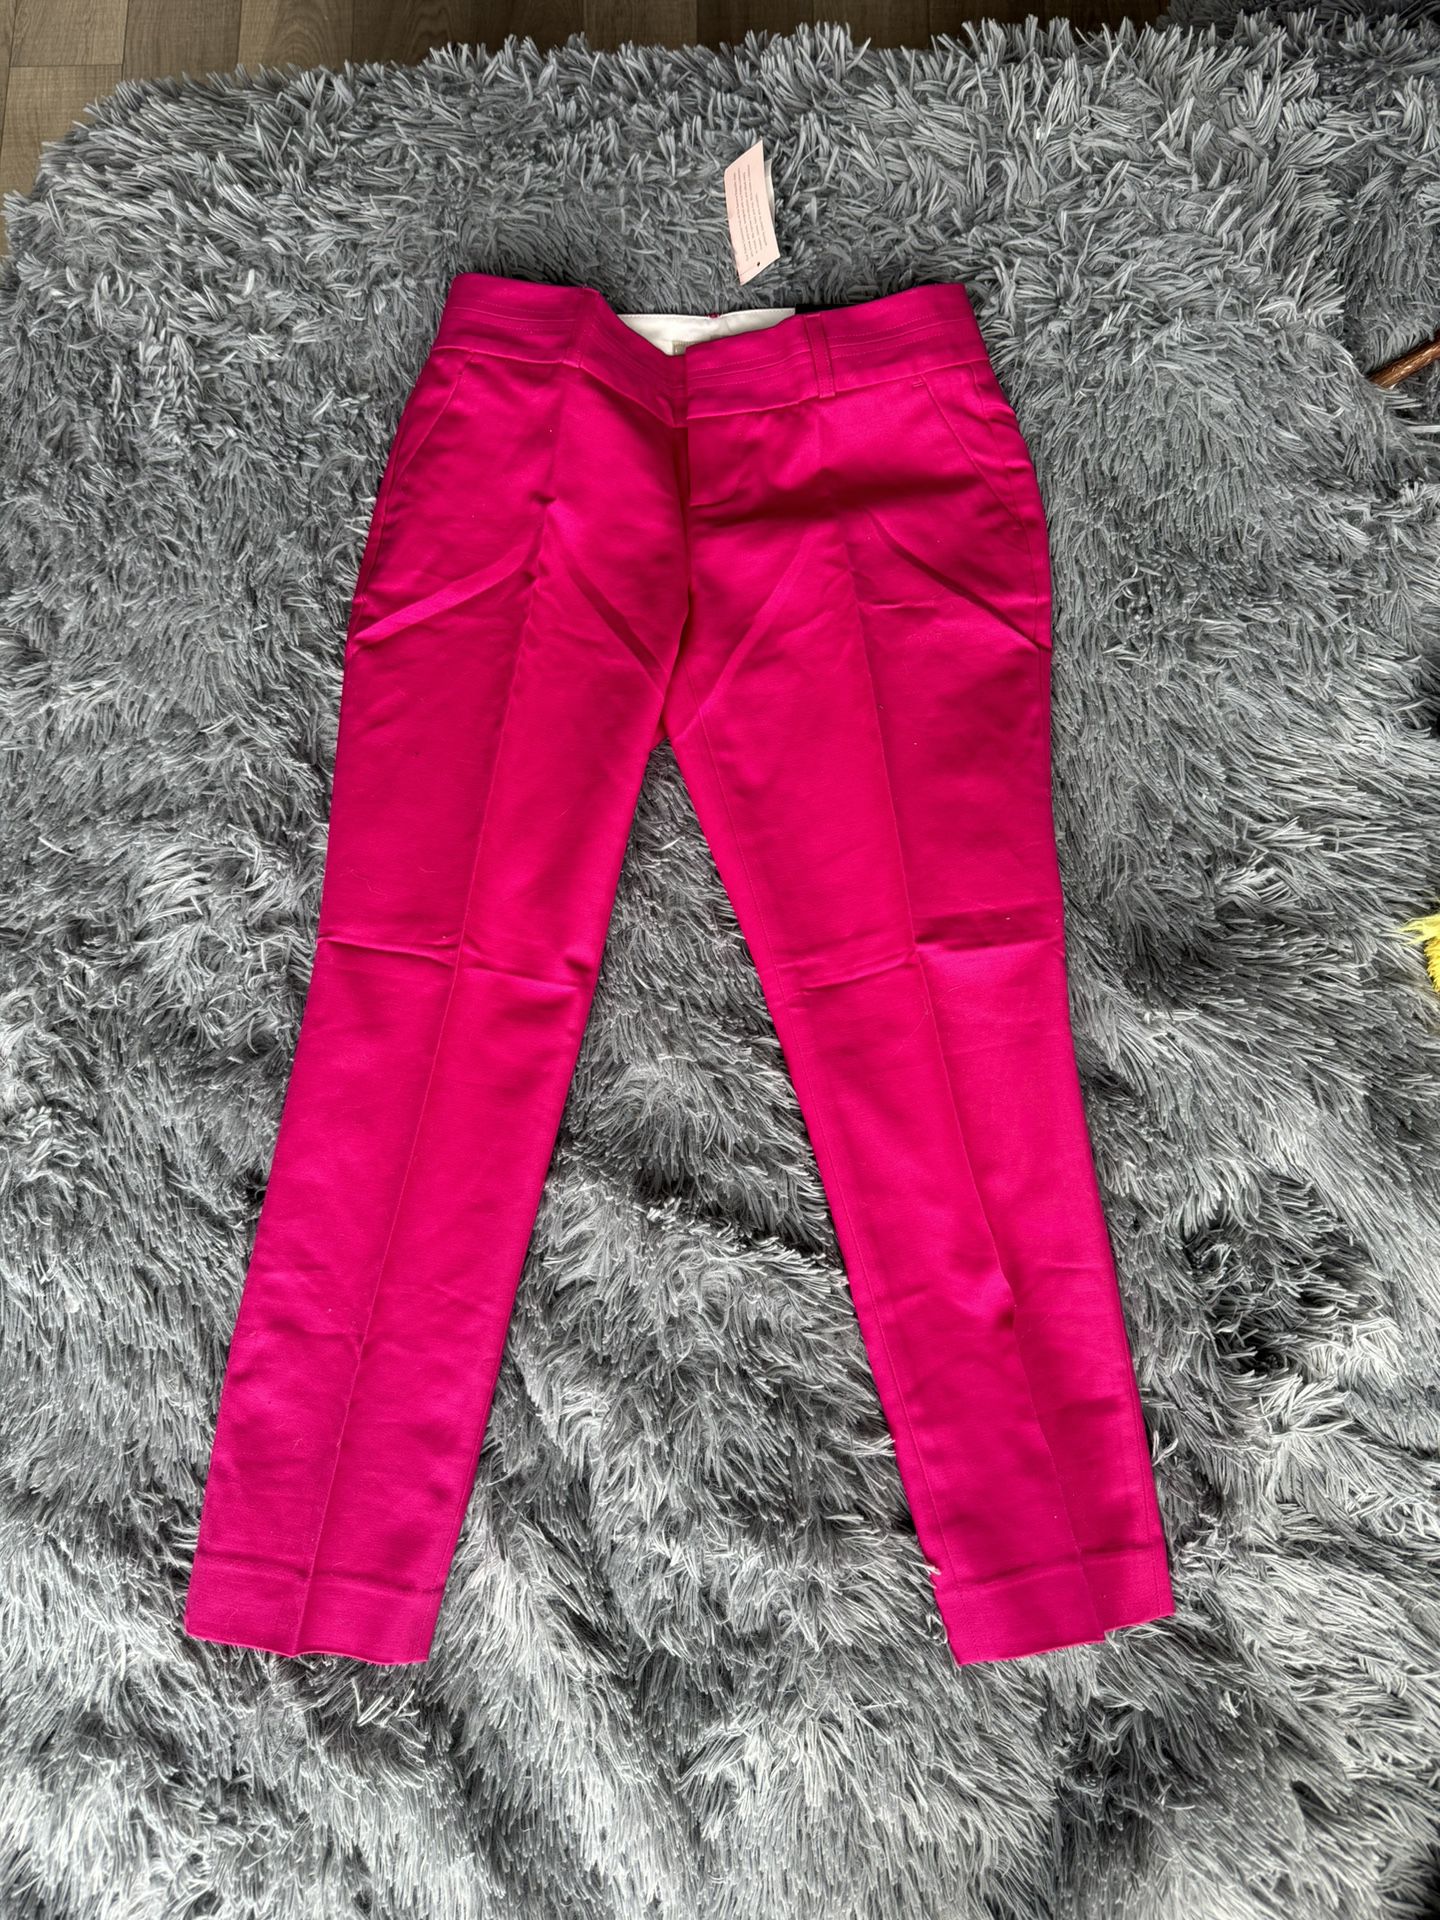 pink dress pants / slacks 